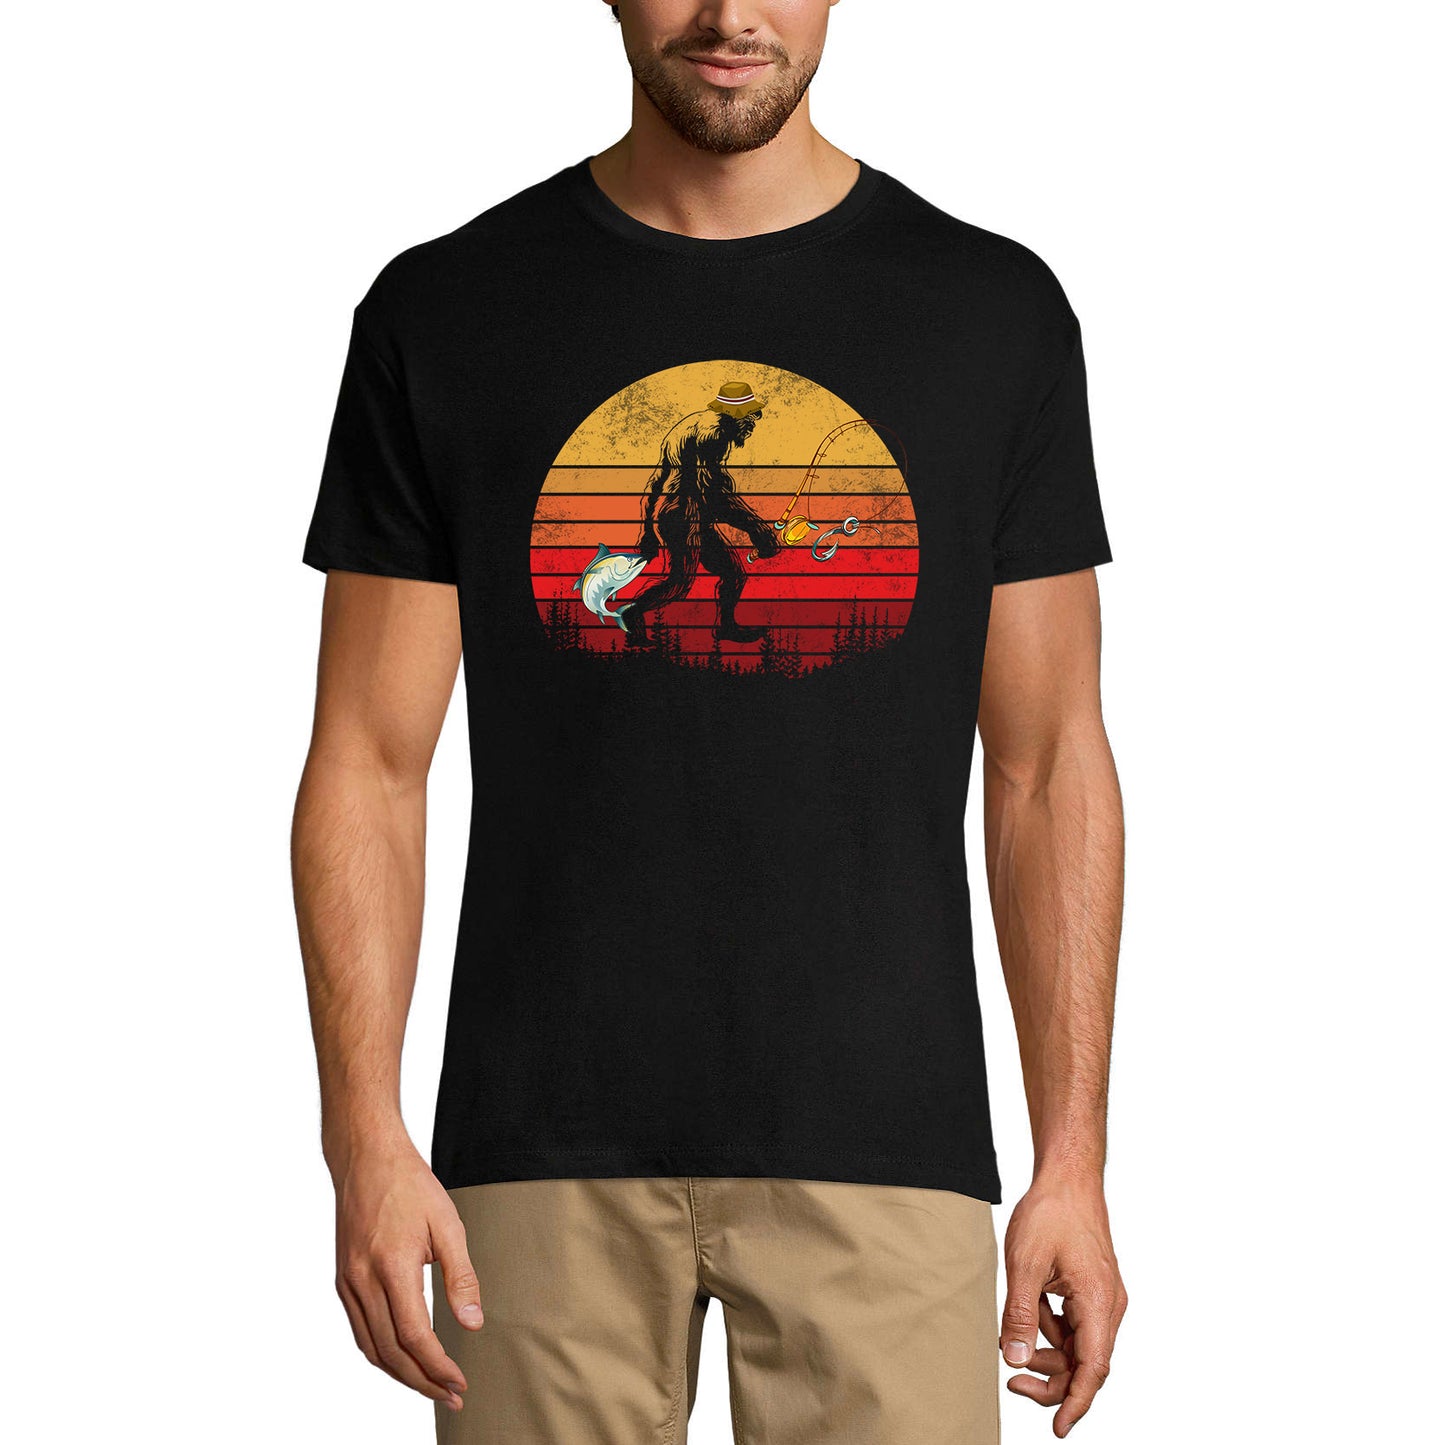 ULTRABASIC Men's Vintage T-Shirt Retro Fisherman - Fishing Funny Fish Pole Humor Tee Shirt